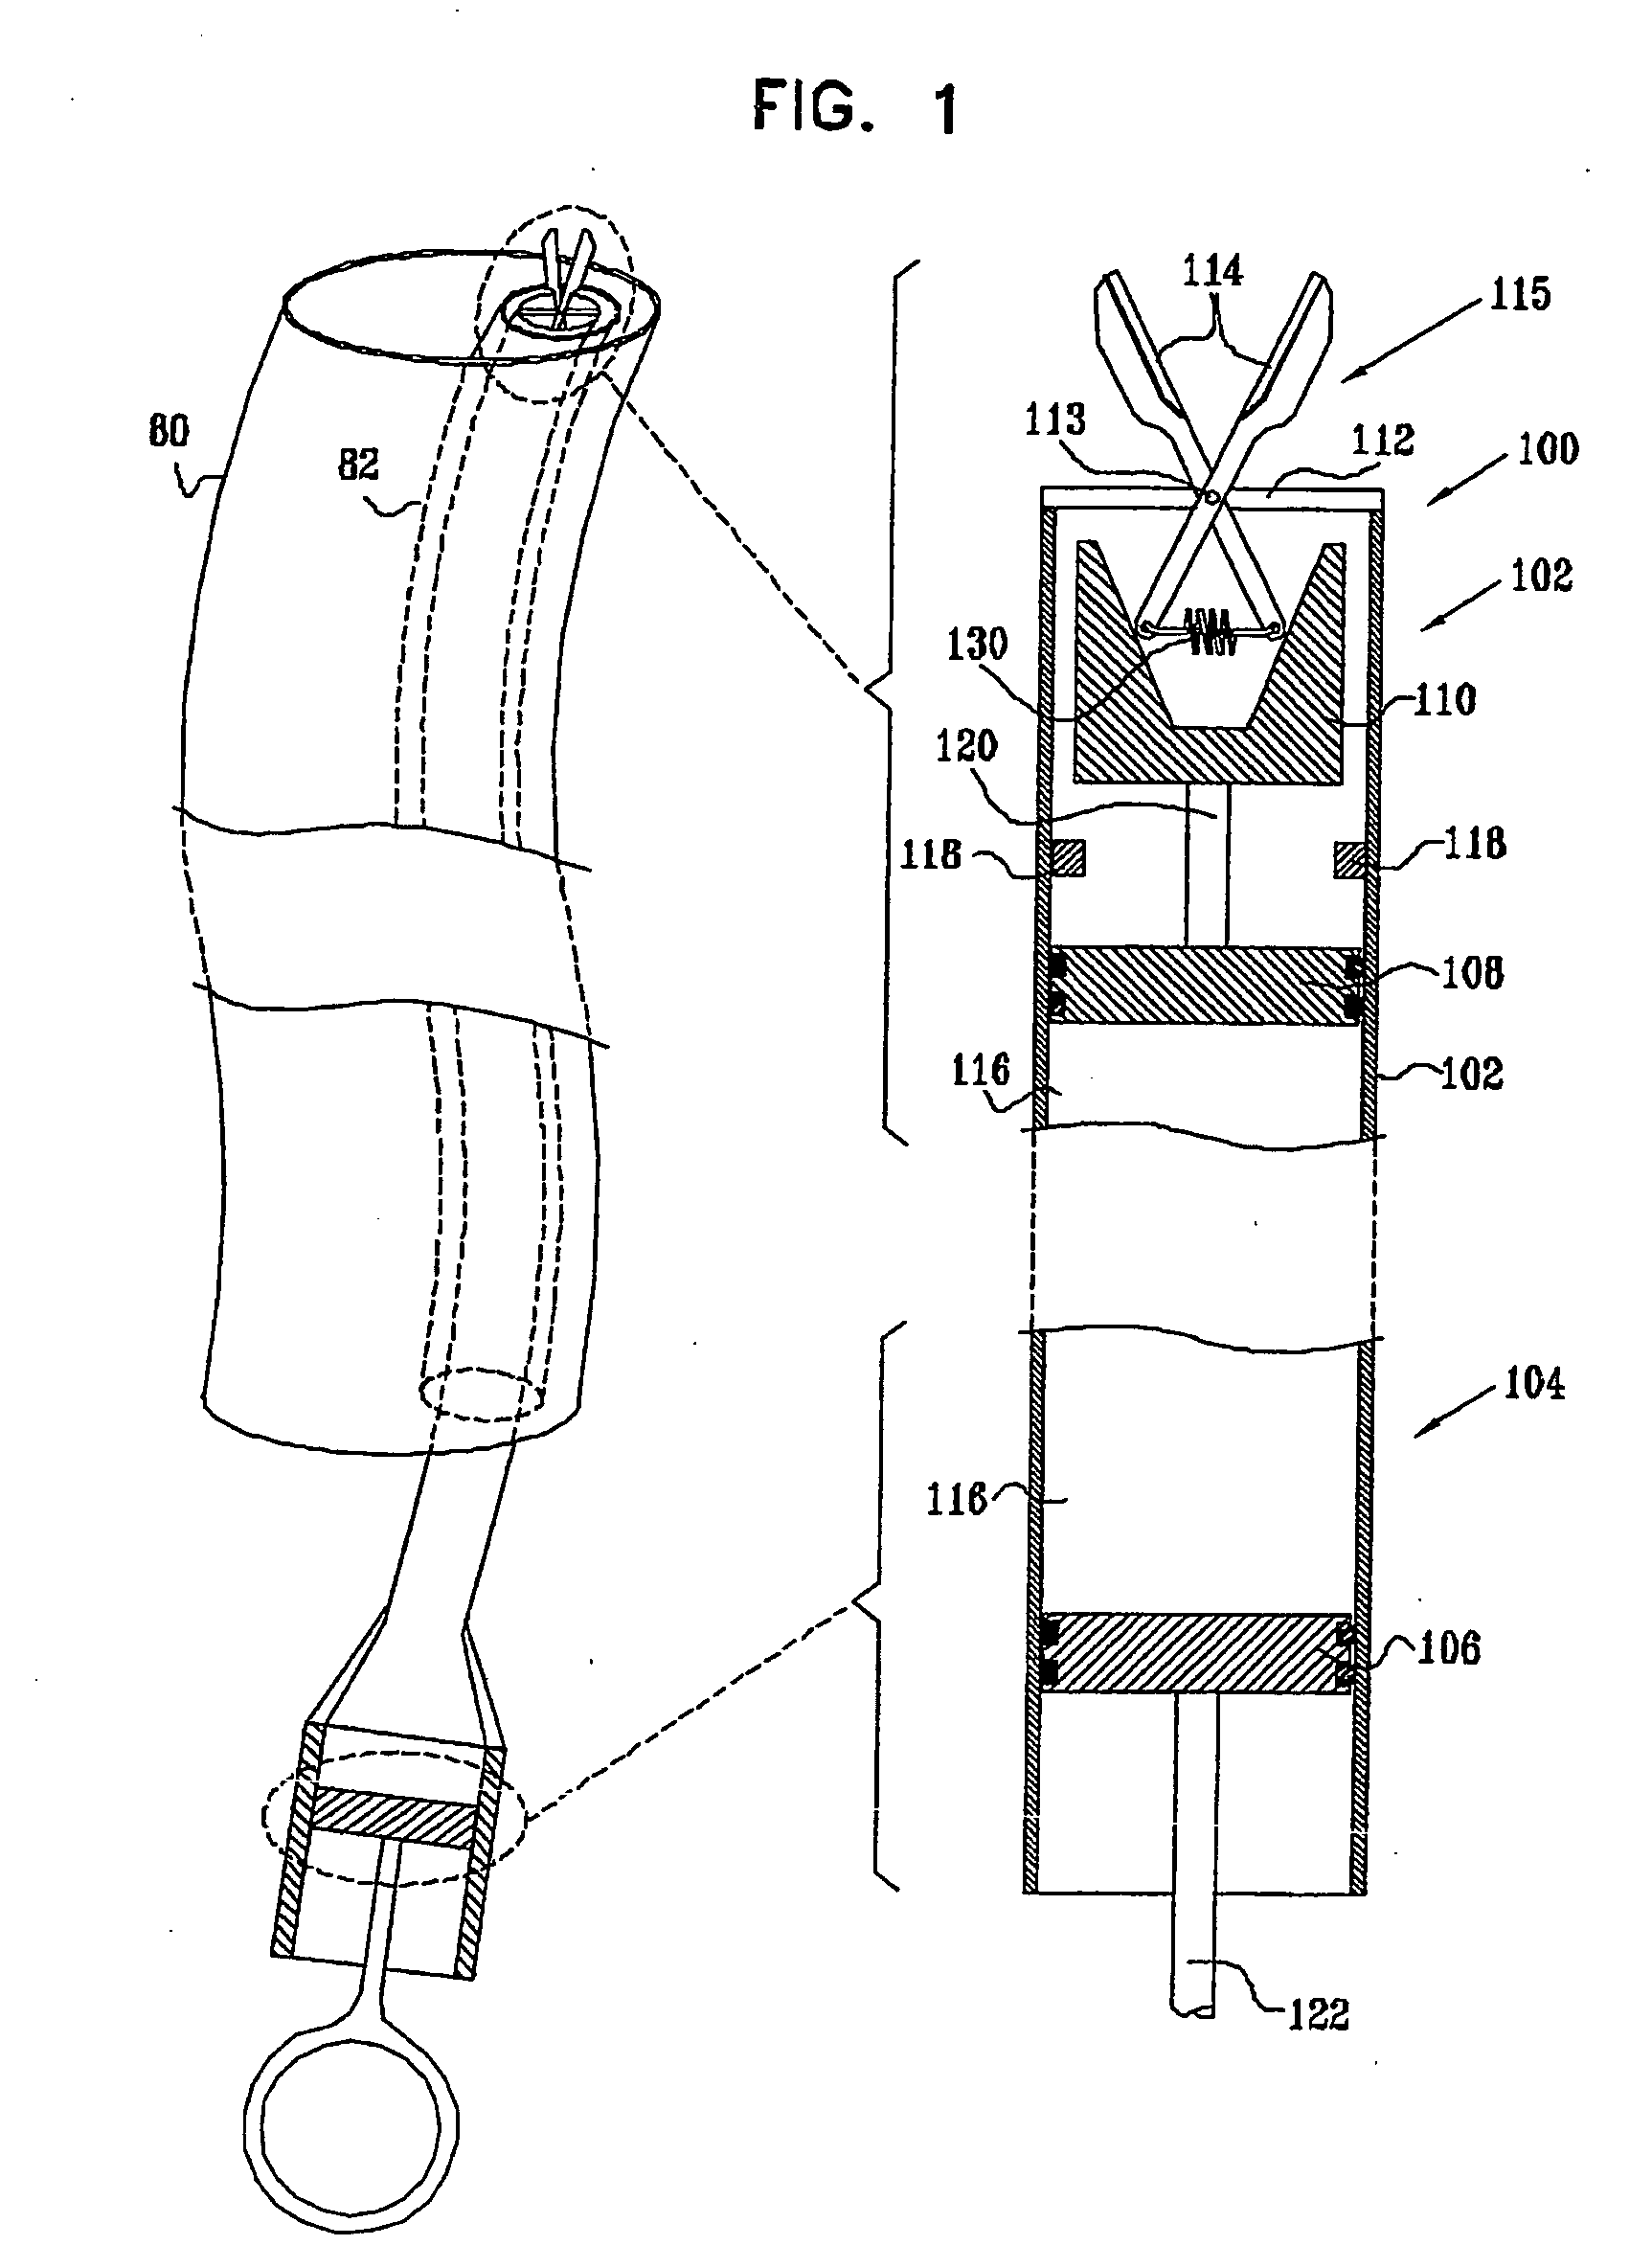 Piston-actuated endoscopic tool